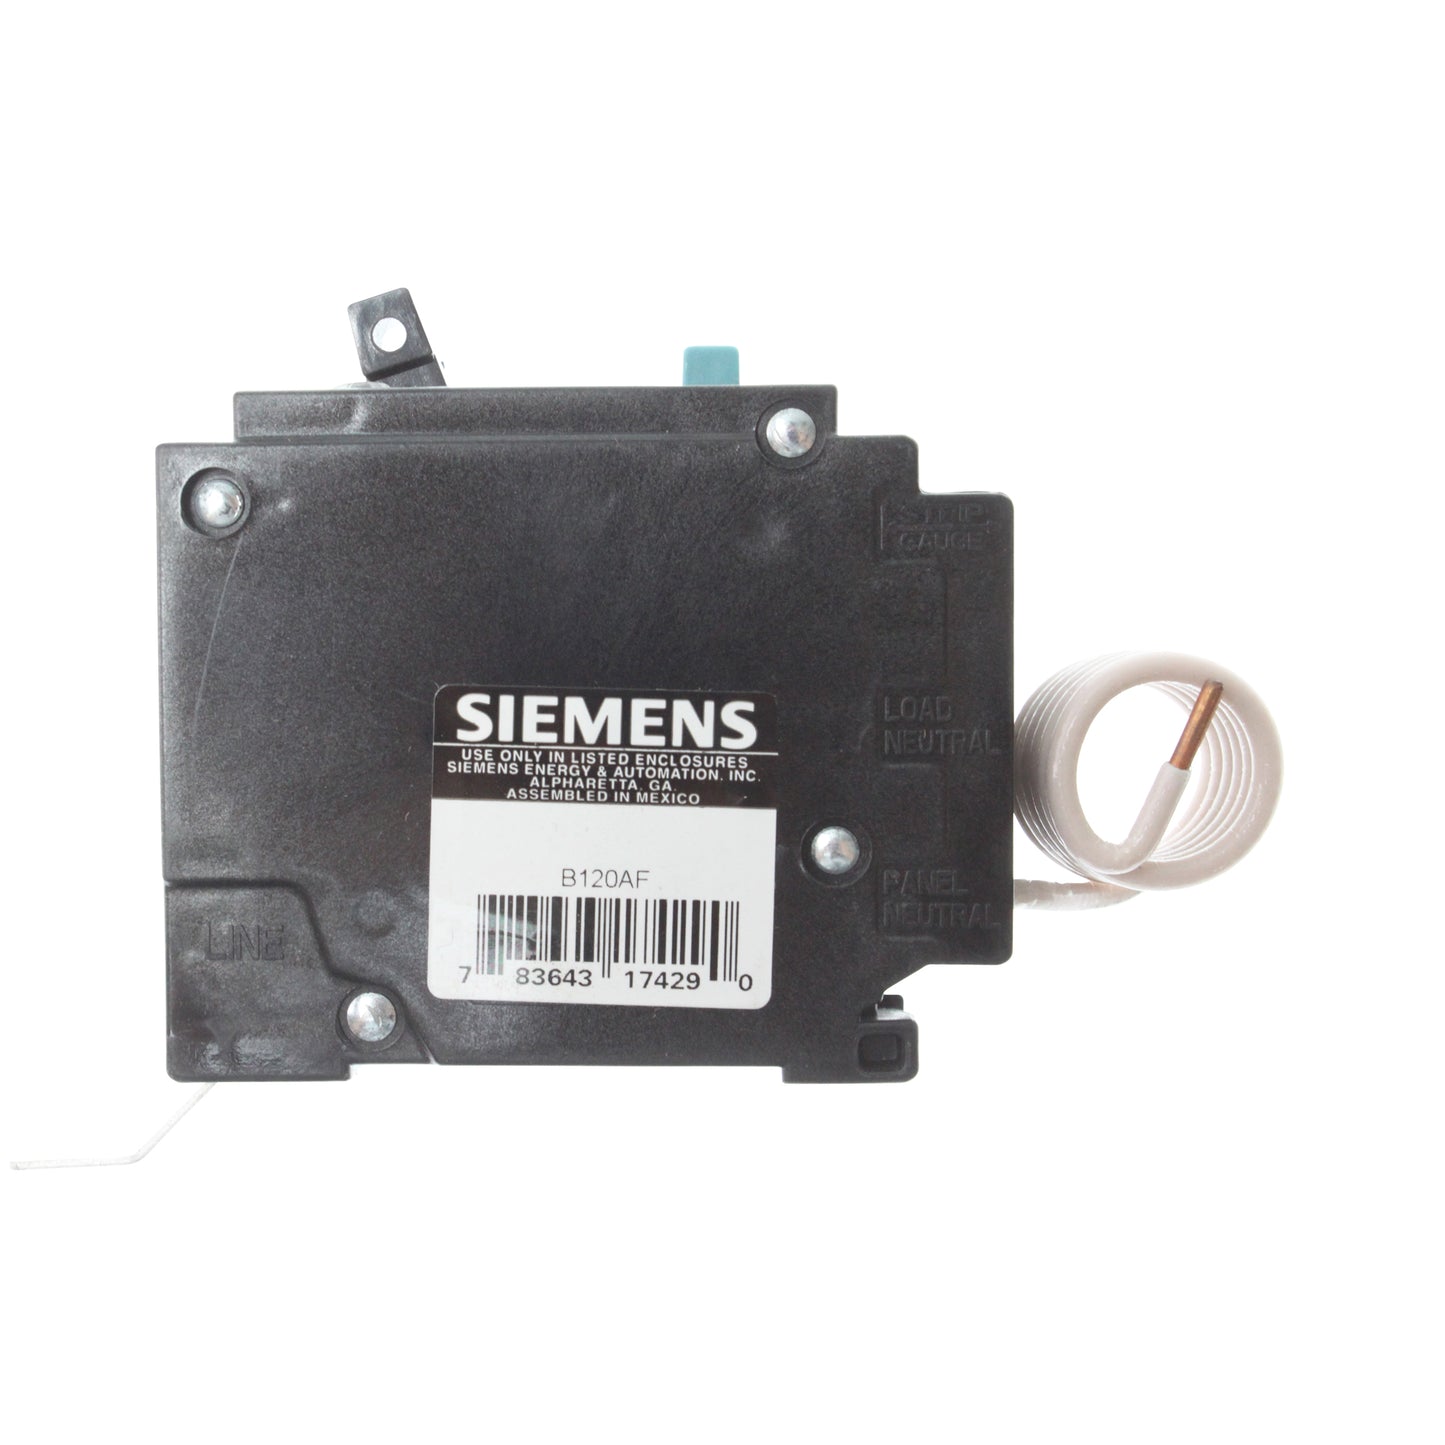 Siemens B120AF